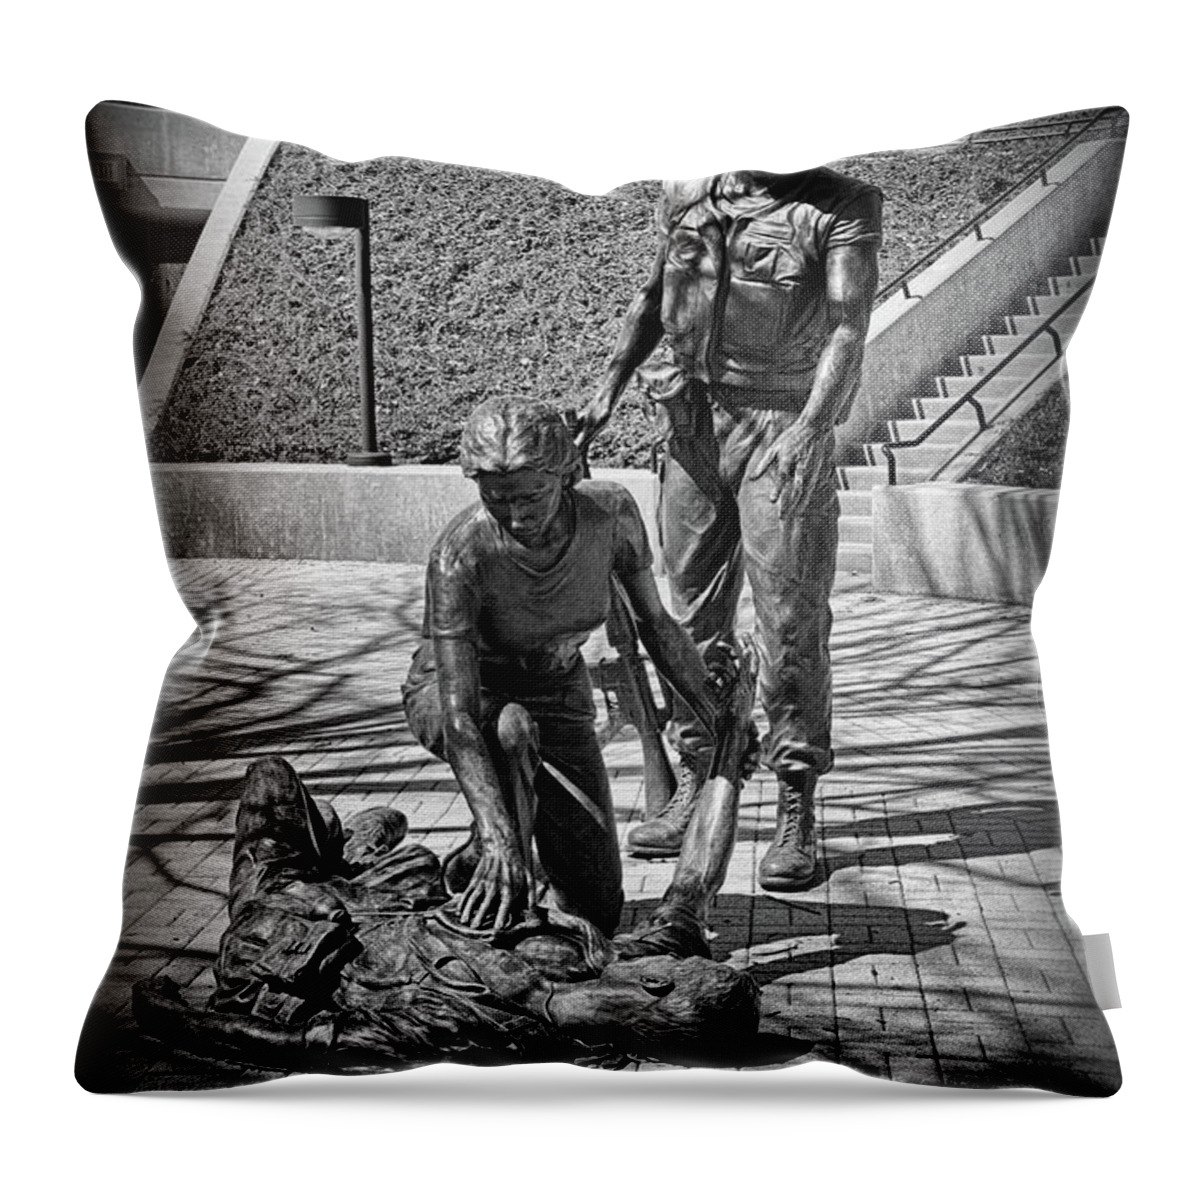 Paul Ward Throw Pillow featuring the photograph NJ Vietnam Veterans Memorial by Paul Ward